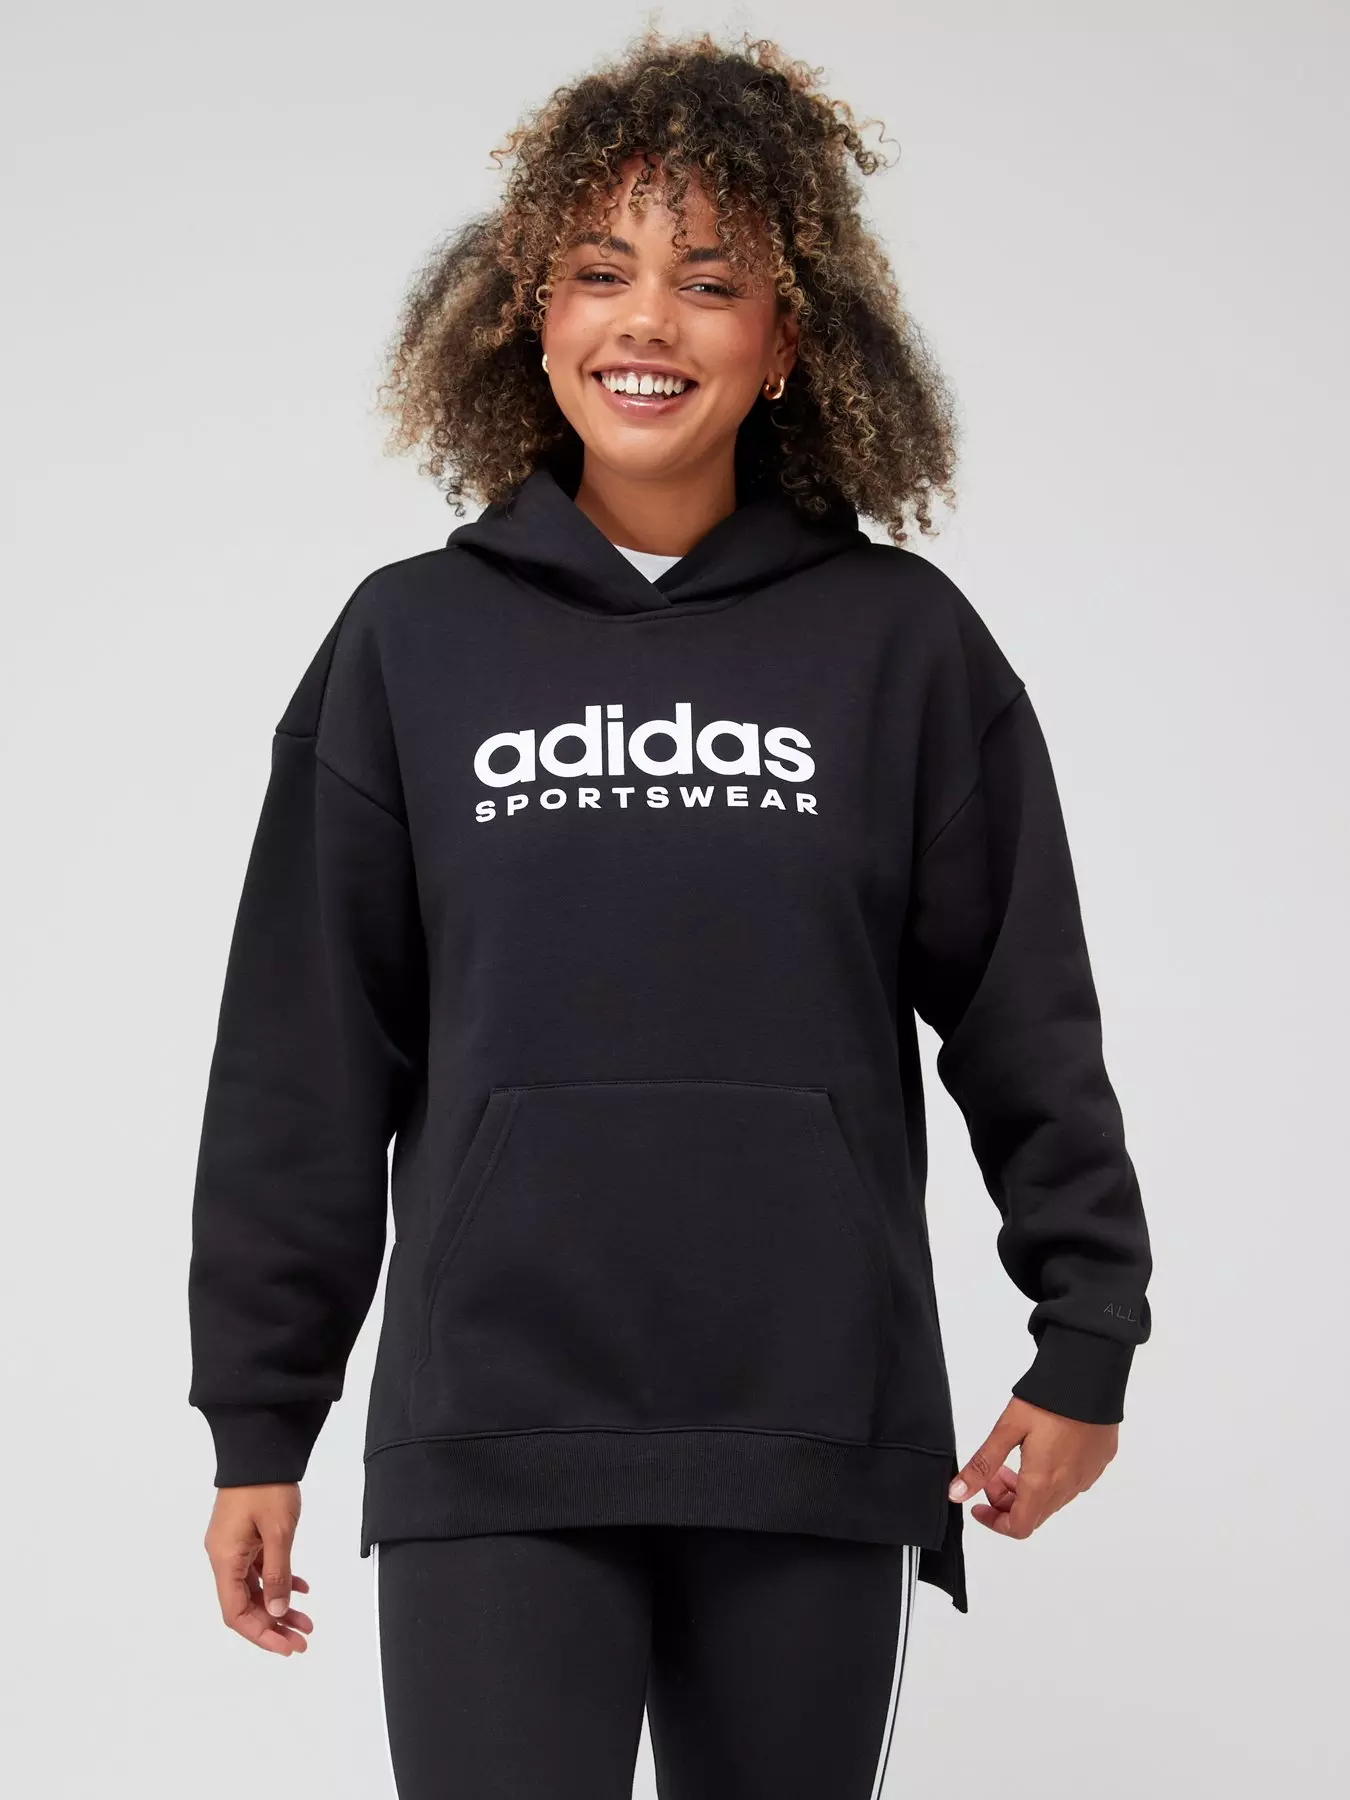 & Women | | sweatshirts Ireland Sportswear | Adidas Hoodies | Very